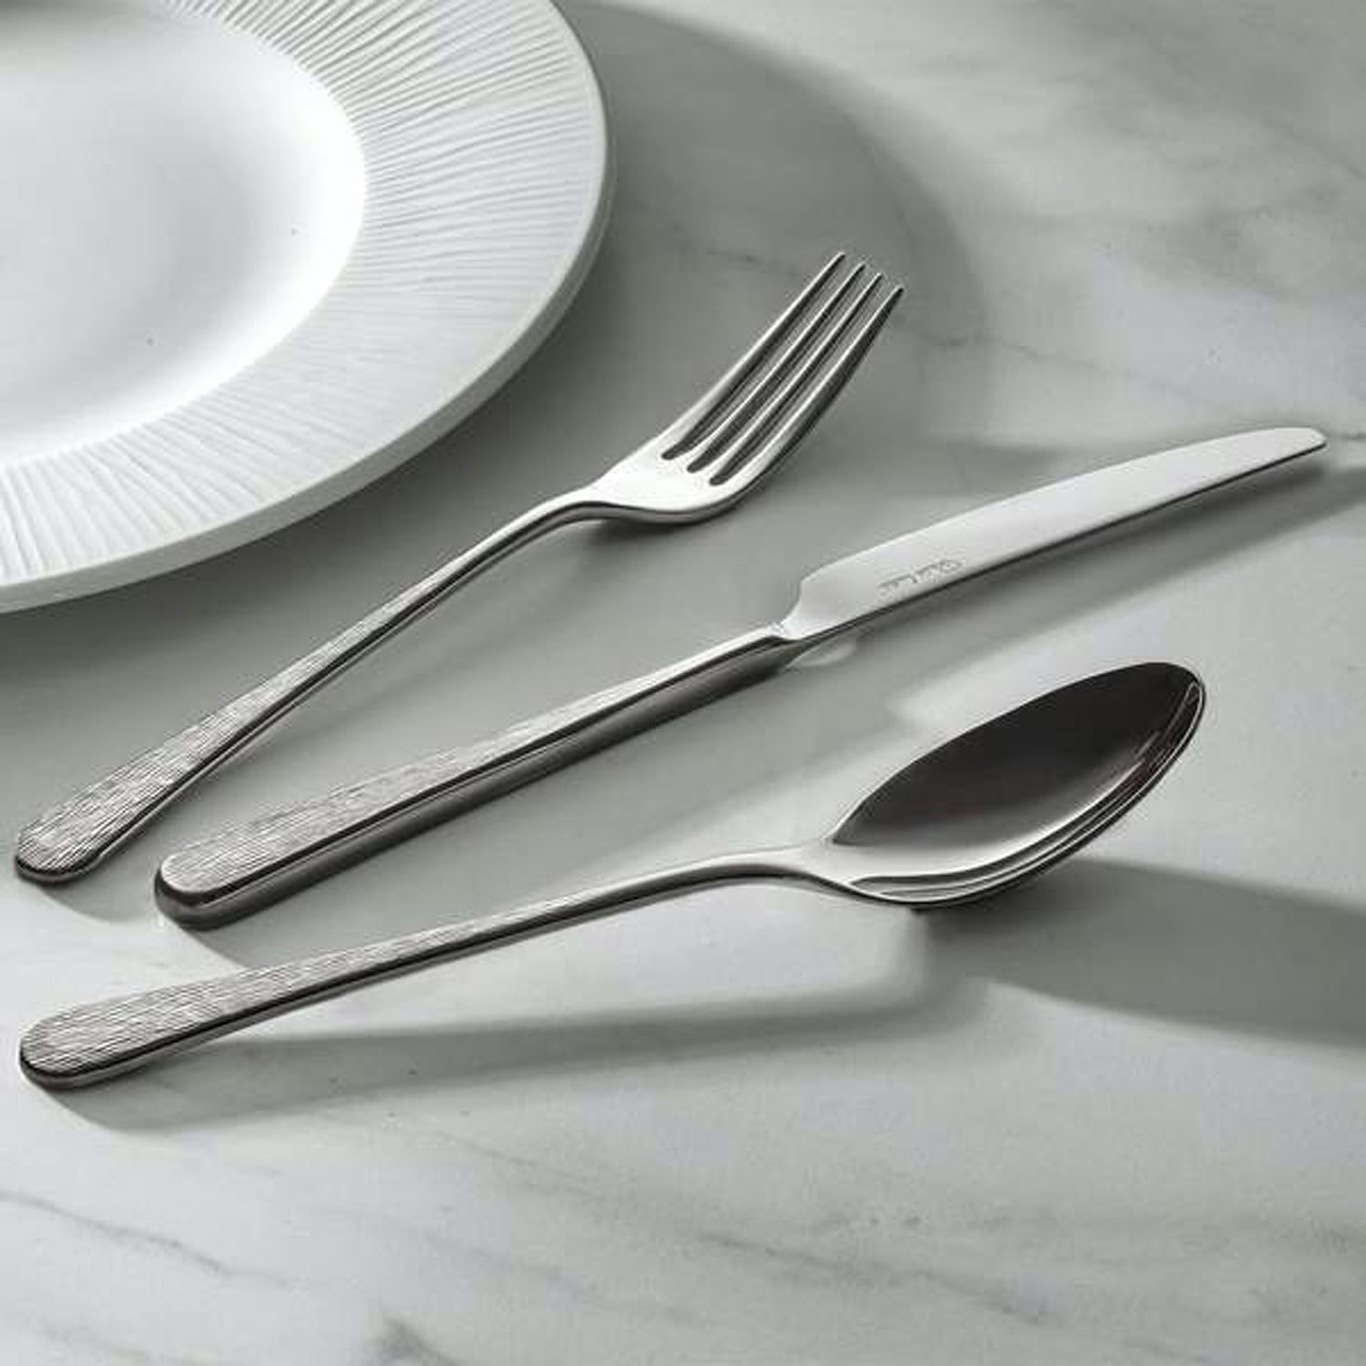 https://royaldesign.com/image/2/robert-welch-skye-dessert-fork-185-cm-2?w=800&quality=80